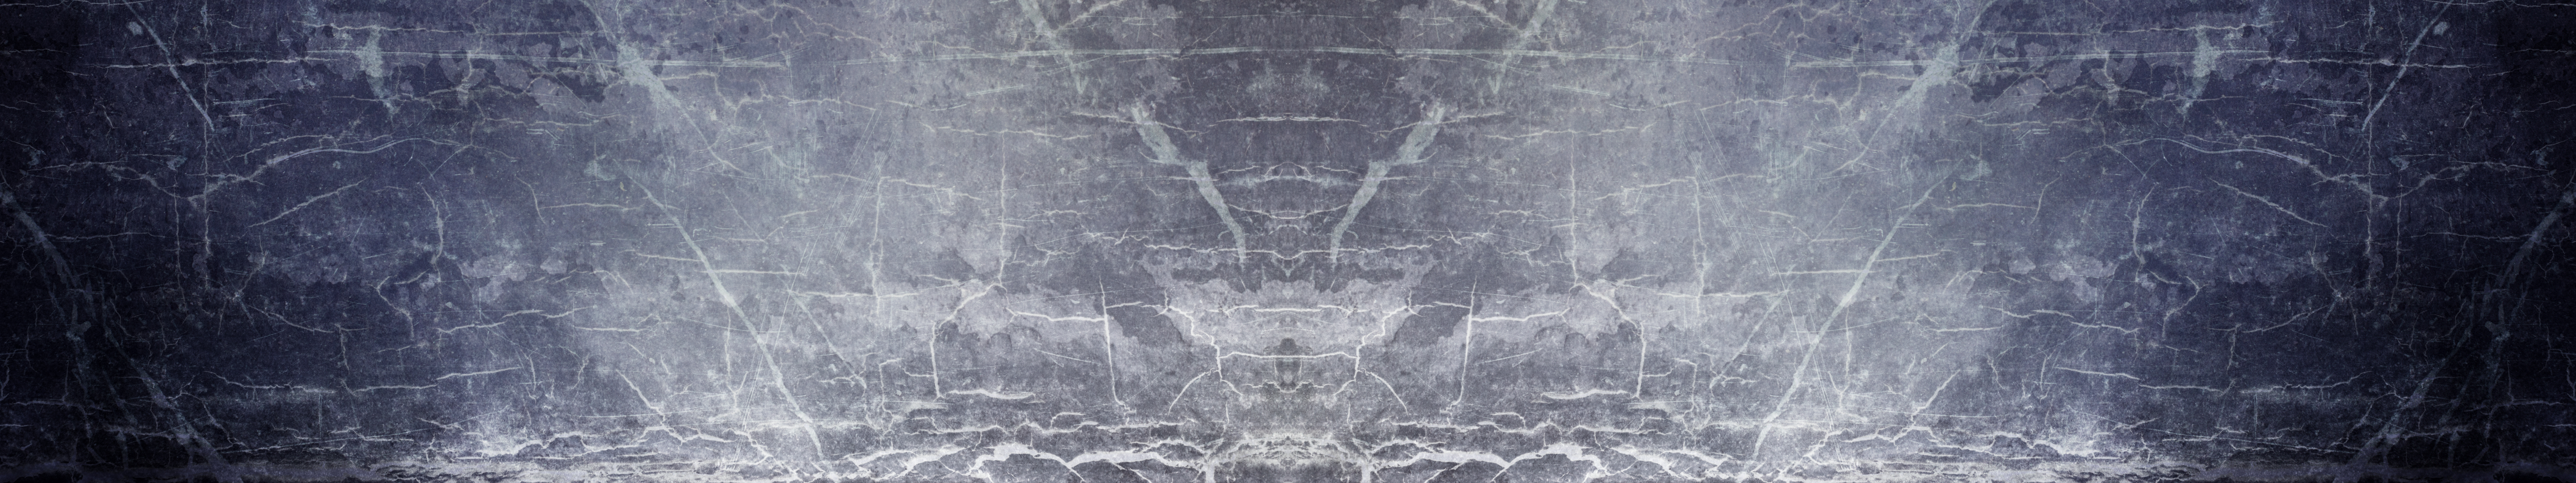 Jansma S Spot Abstract Eyefinity Wallpaper